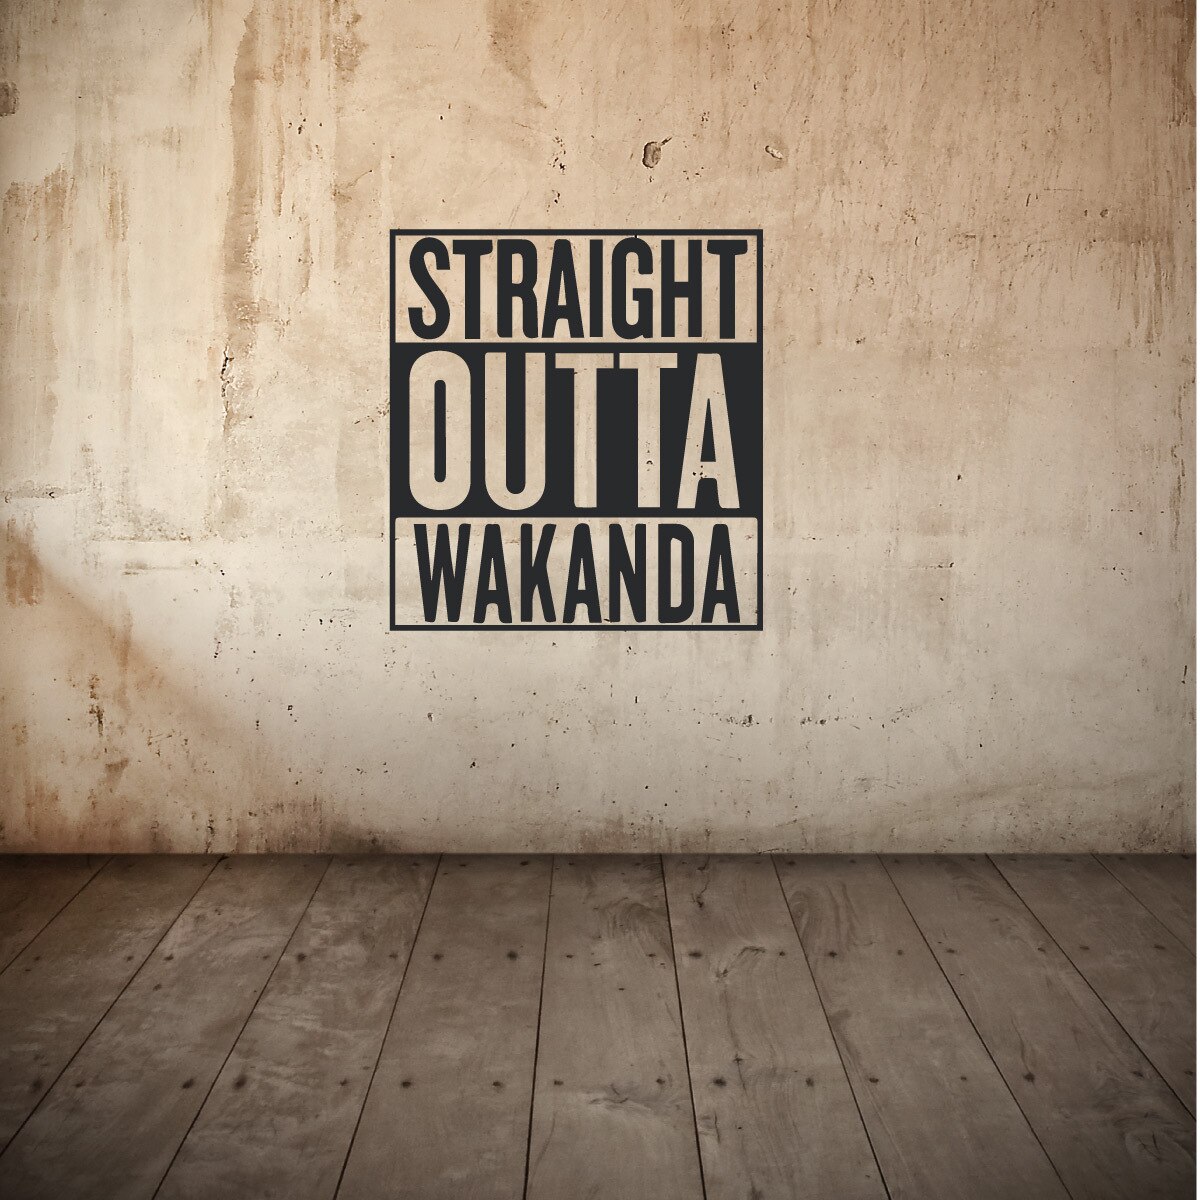 Rechte Outta Wakanda Vinyl Muurtattoo Sticker